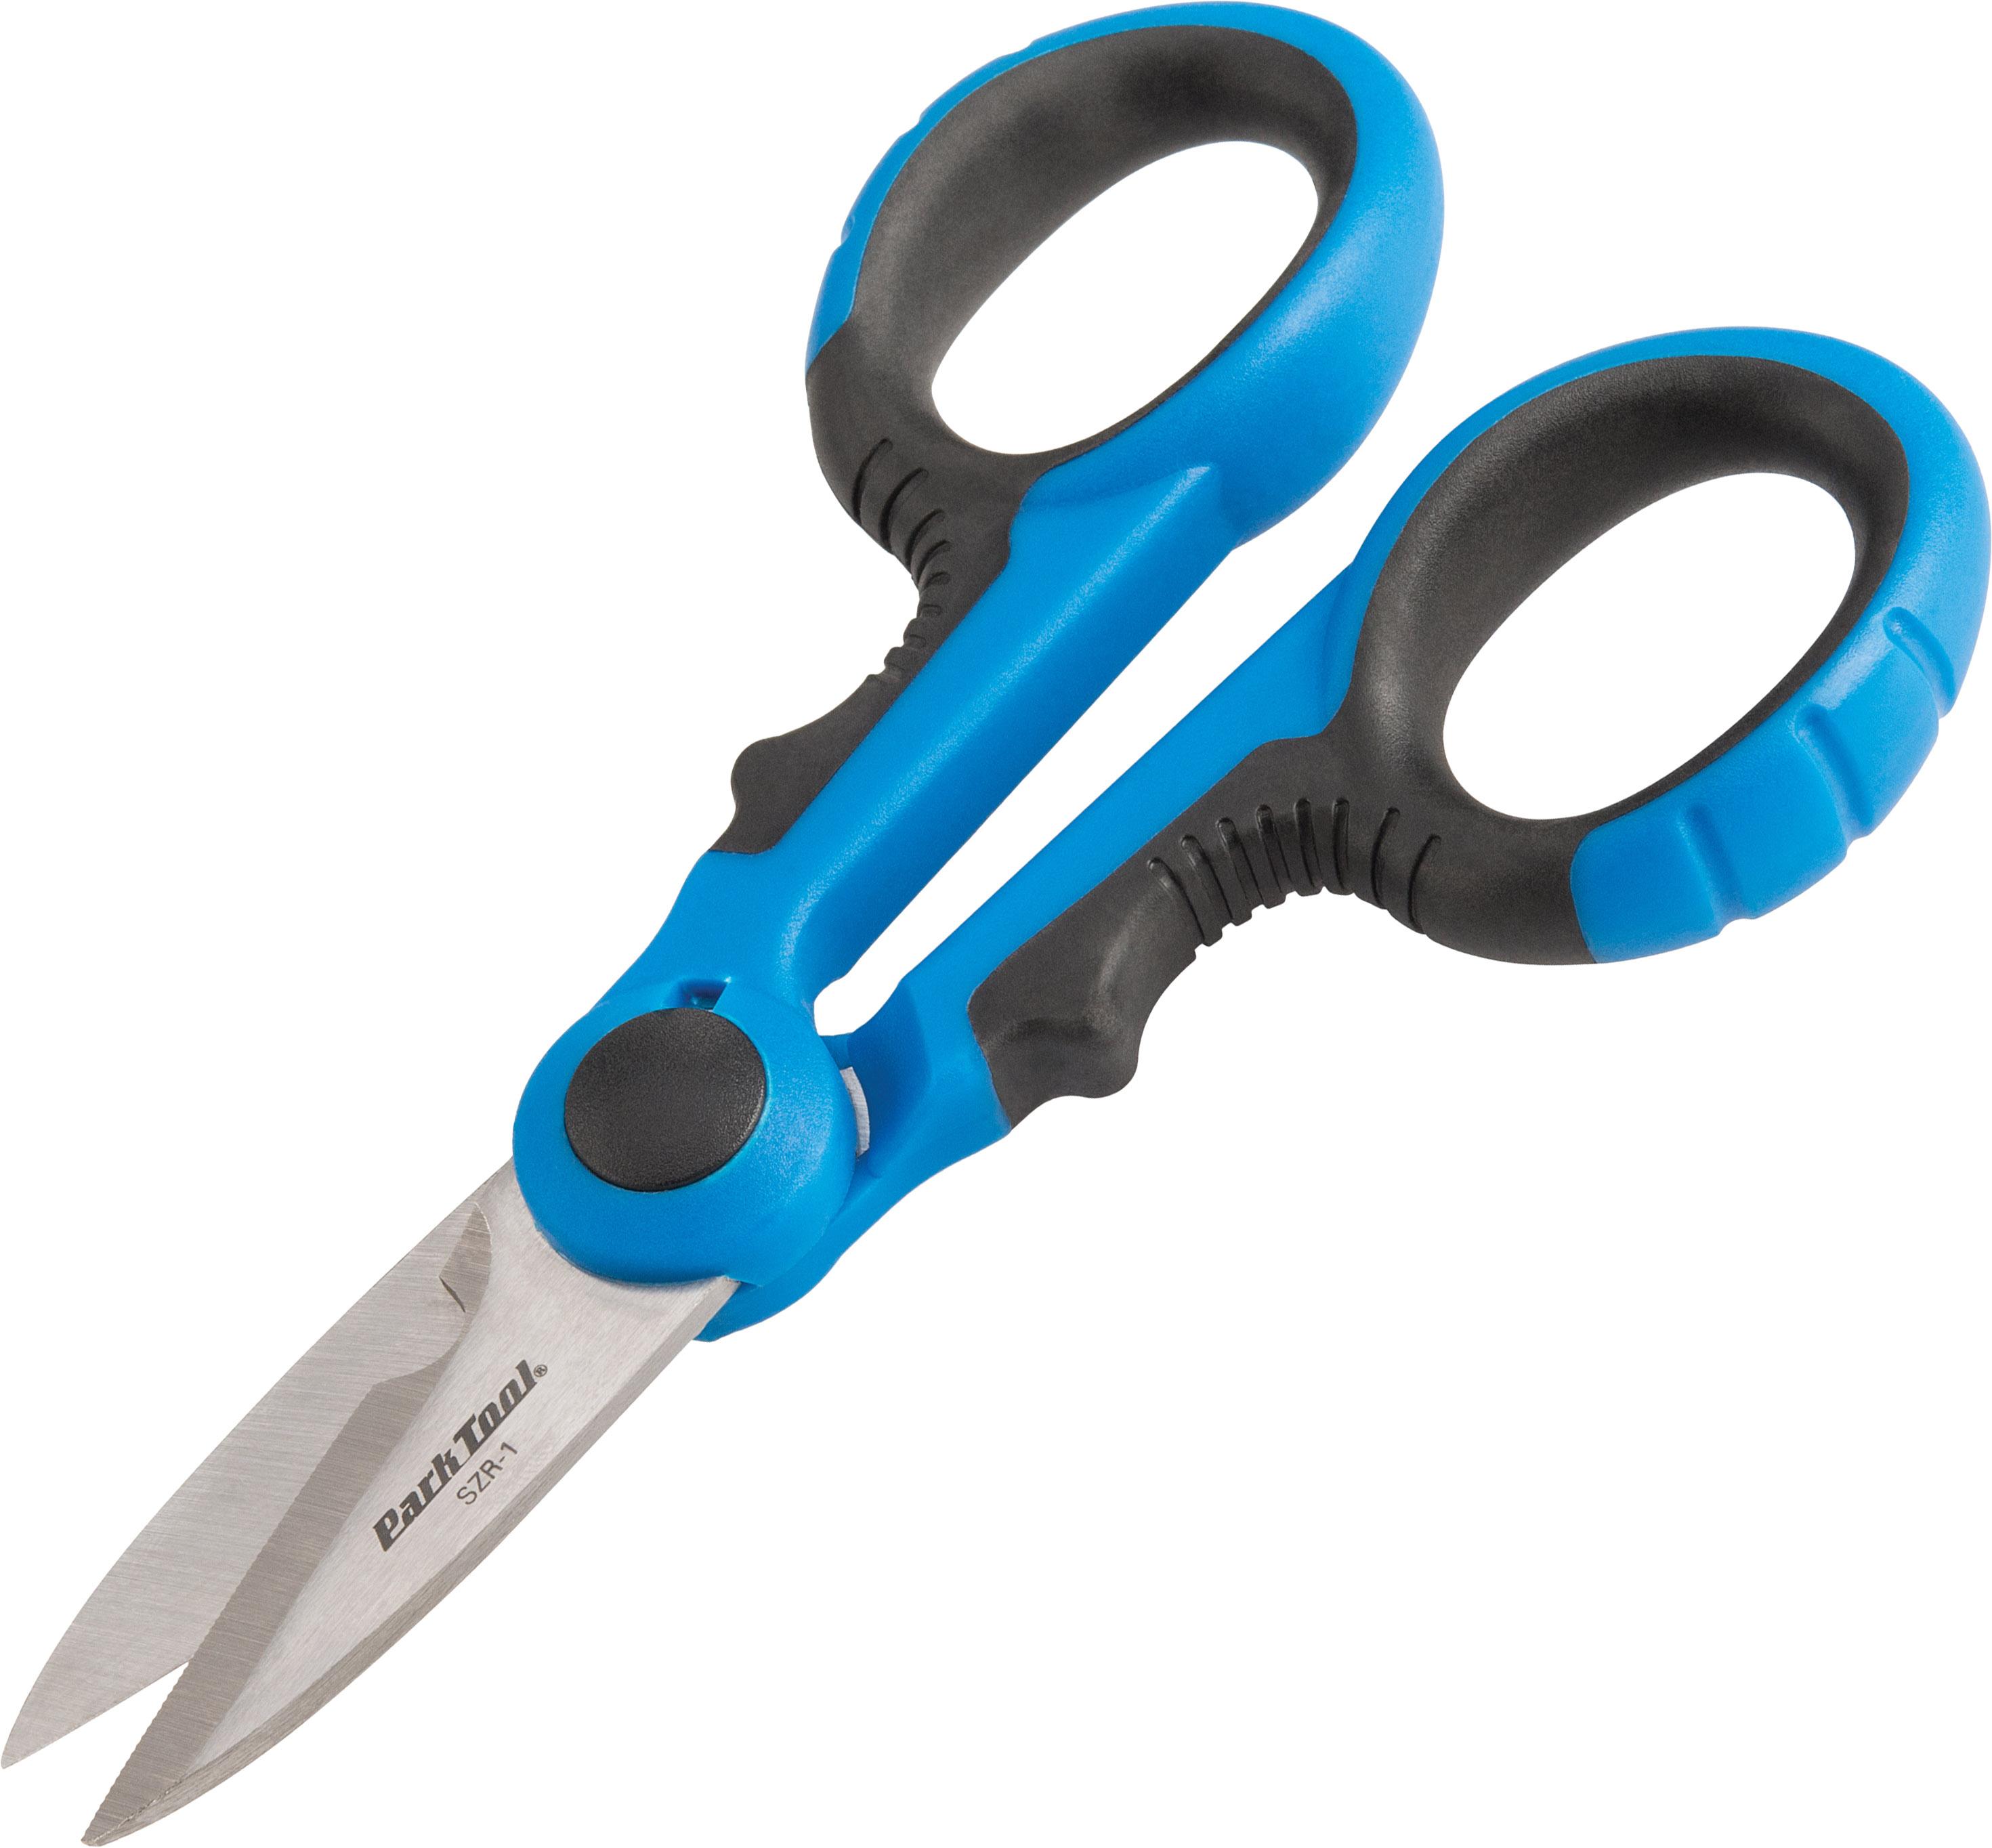 Park Tool Shop Scissors Szr-1 - Blue